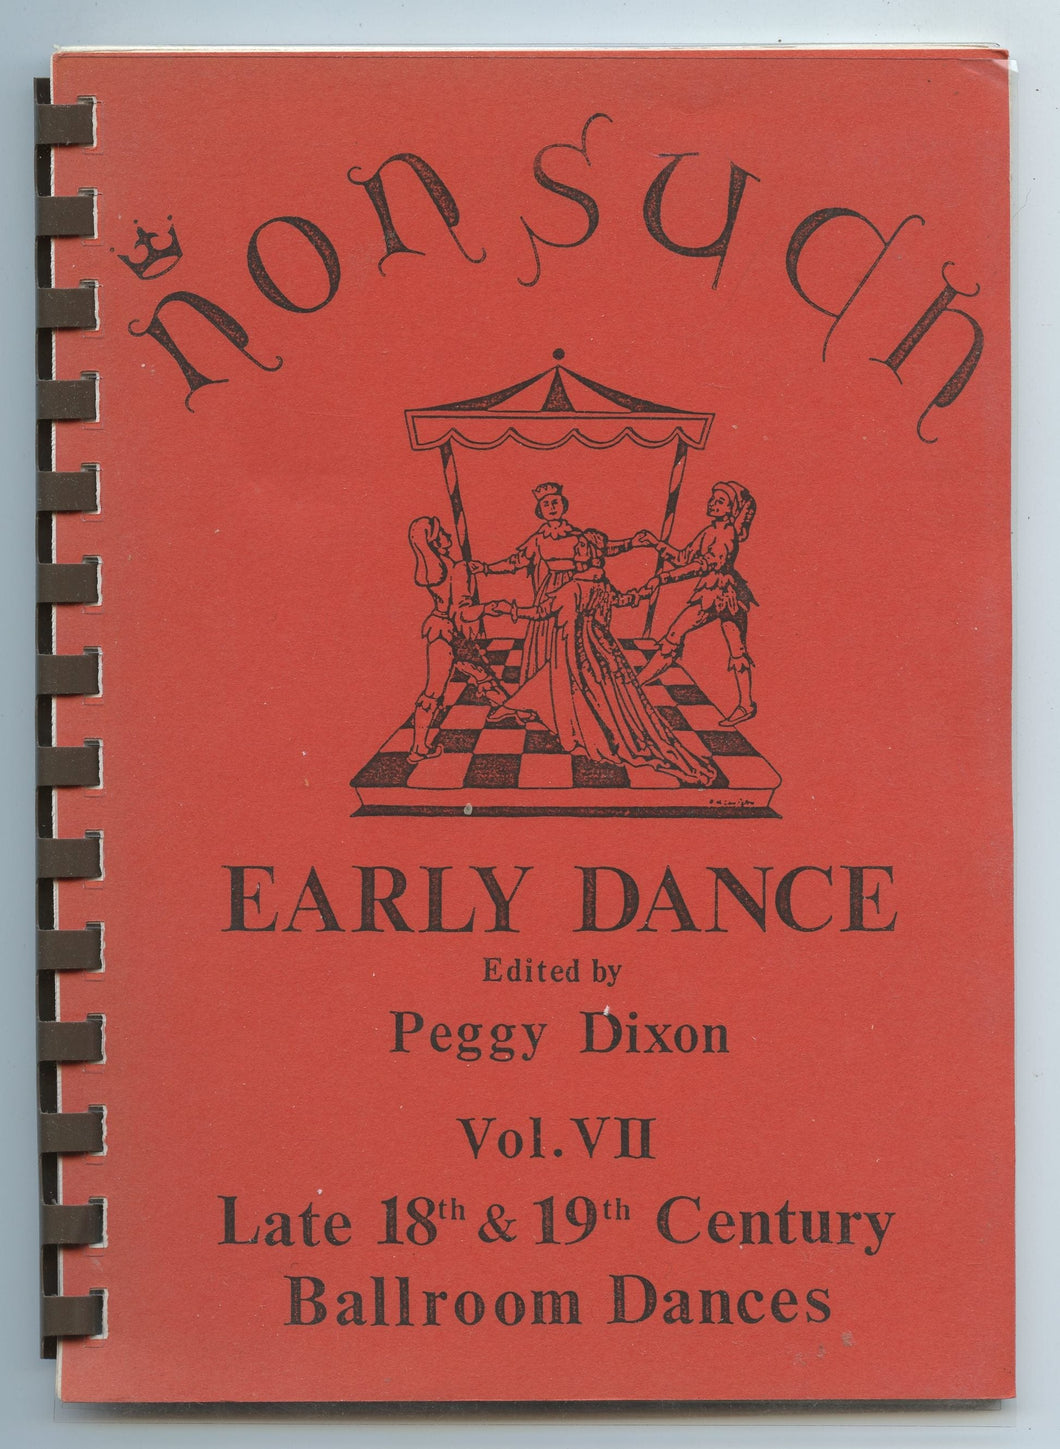 Nonsuch: Early Dance. Vol. VII Late 18th & 19th Century Ballroom Dances 